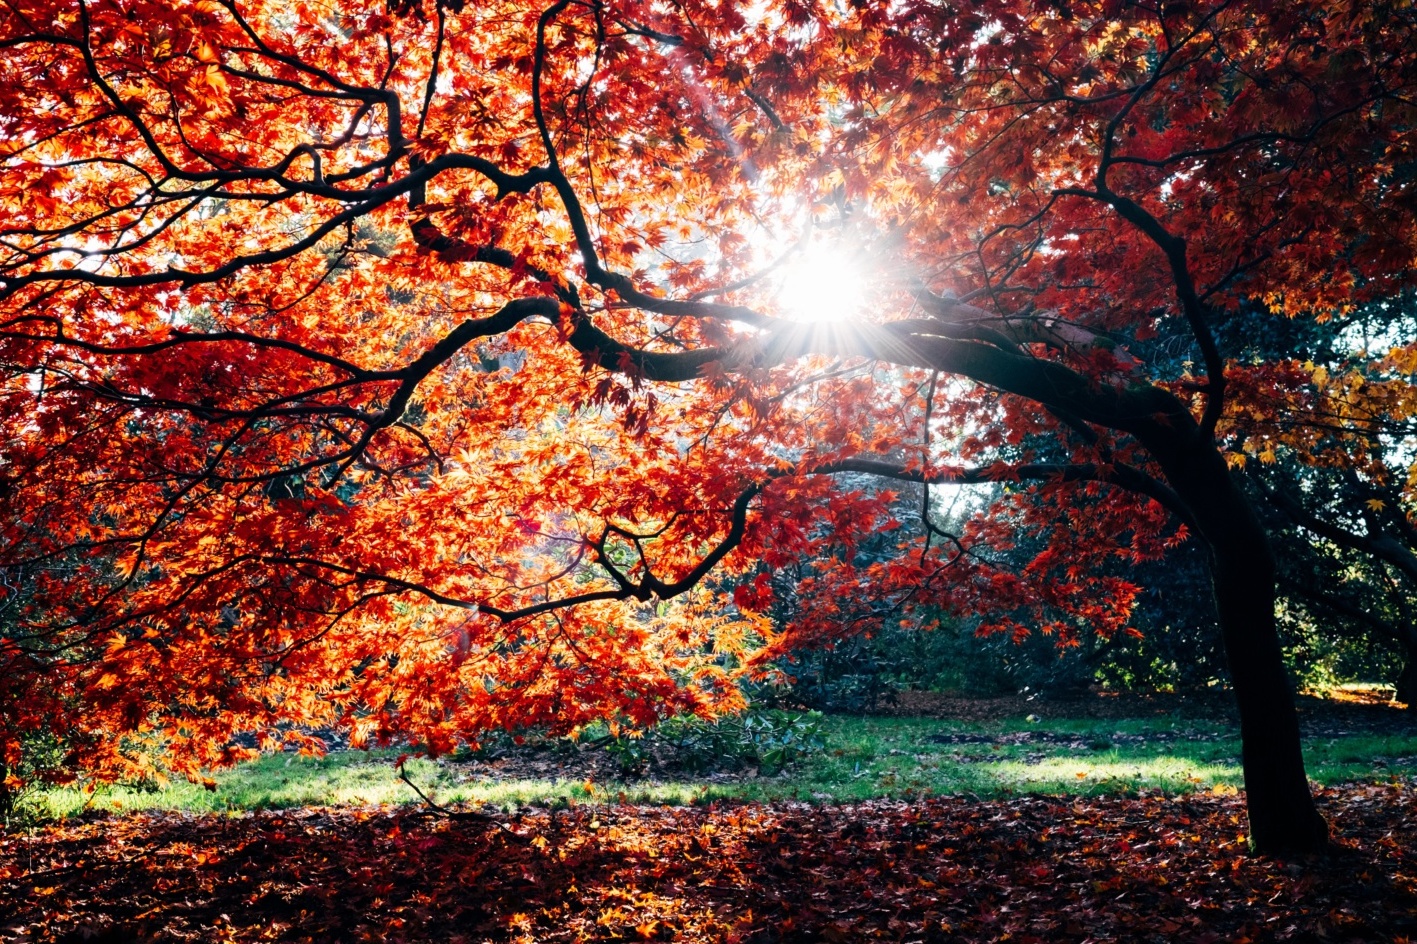 Sunshine peeking through boughs of tree covered in orange autumn leaves